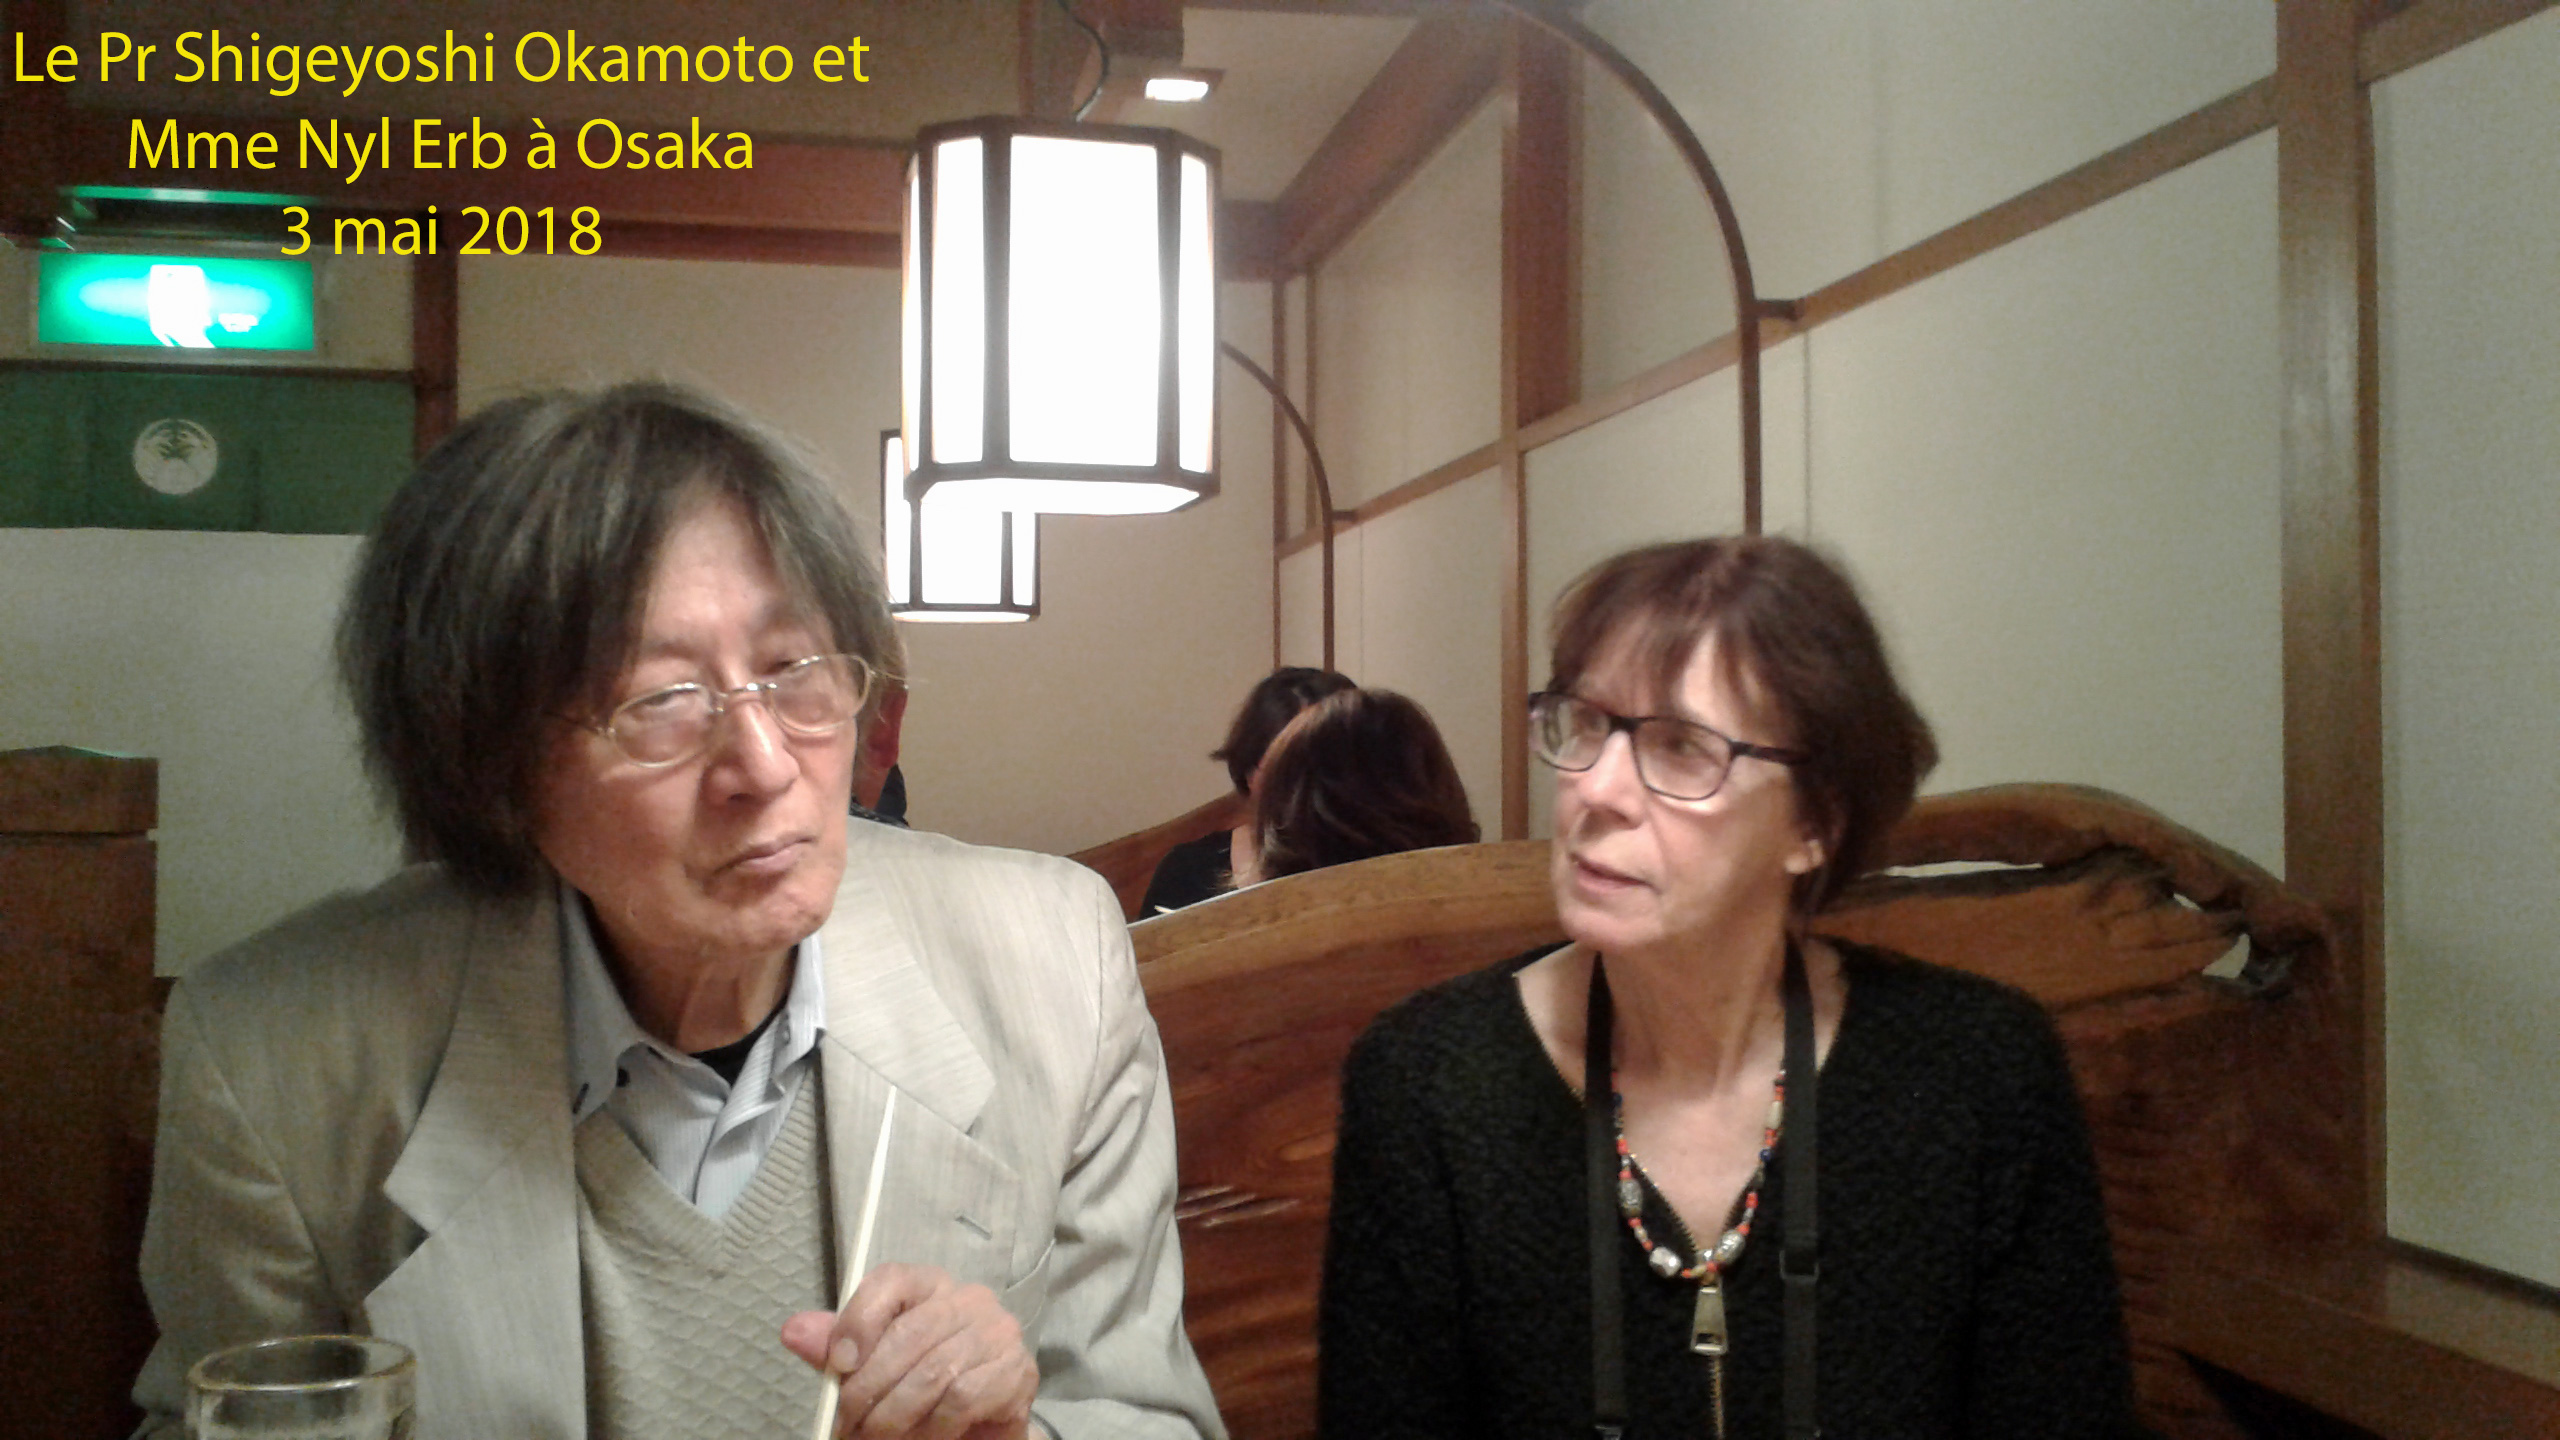 Rencontre à Osaka avec le Pr Shigeyoshi Okamoto (3 mai 2018)